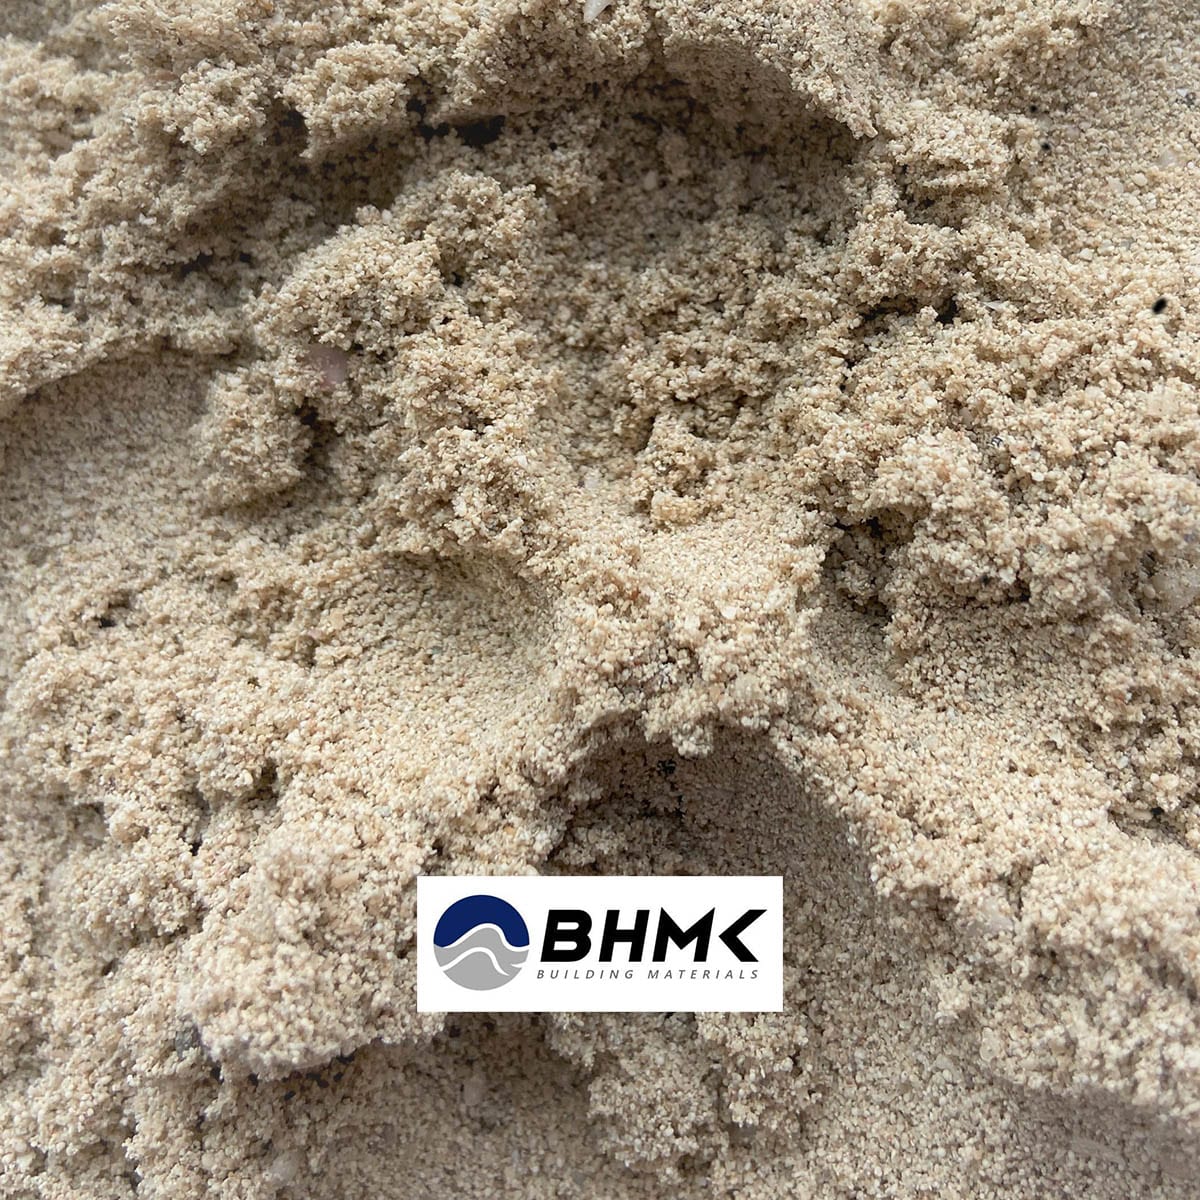 Washed sand bhmk play sand sea sand beach sand white sand best quality Dubai Sharjah Abu Dhabi UAE BHMK sand supplier 3